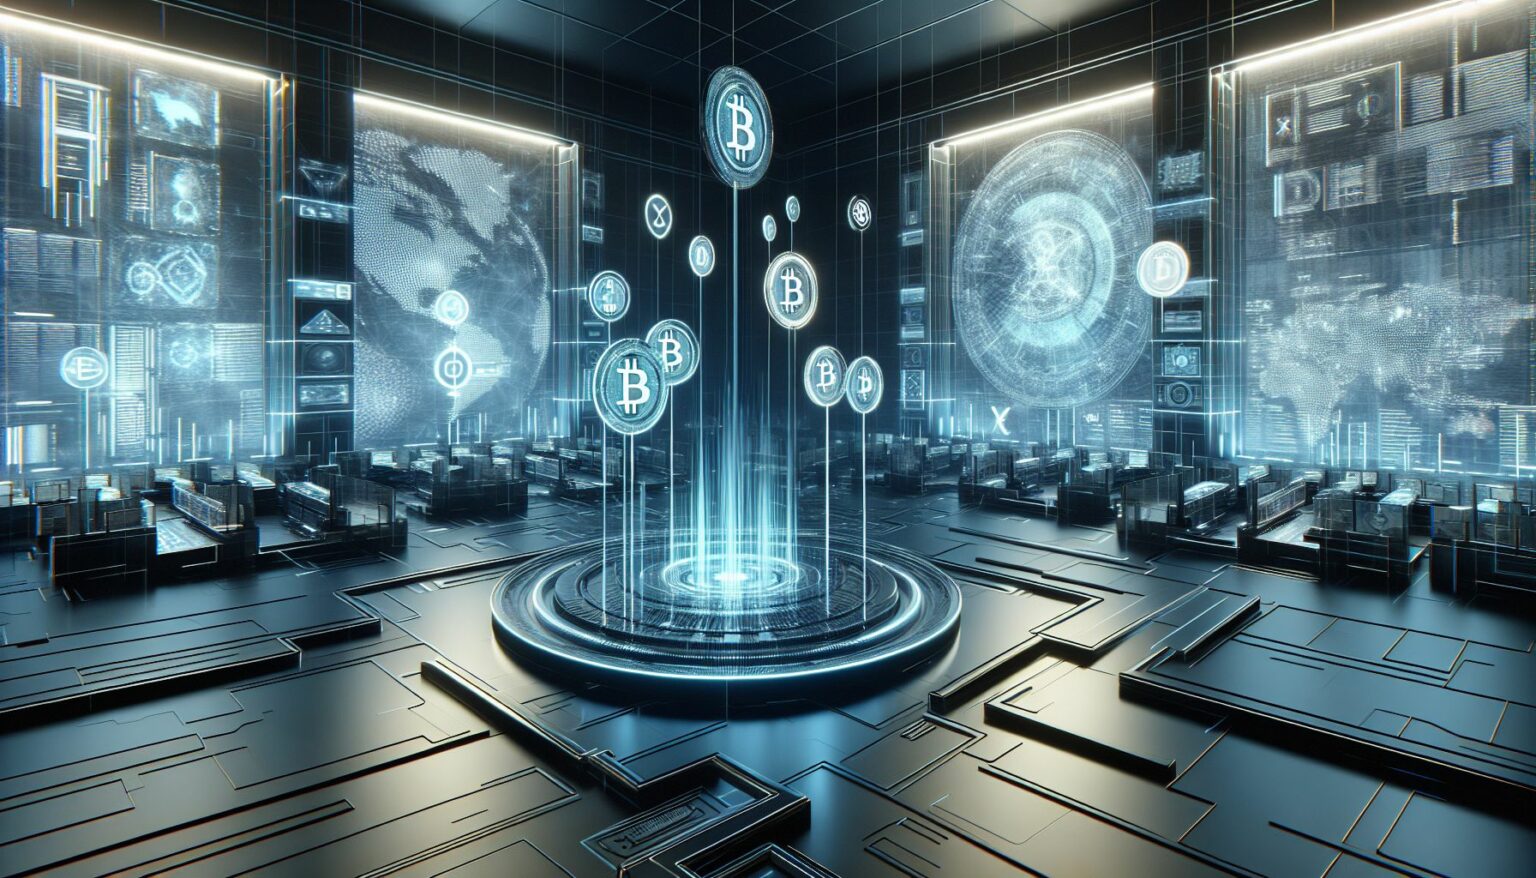 futuristic trading platform with cryptocurrency symbols